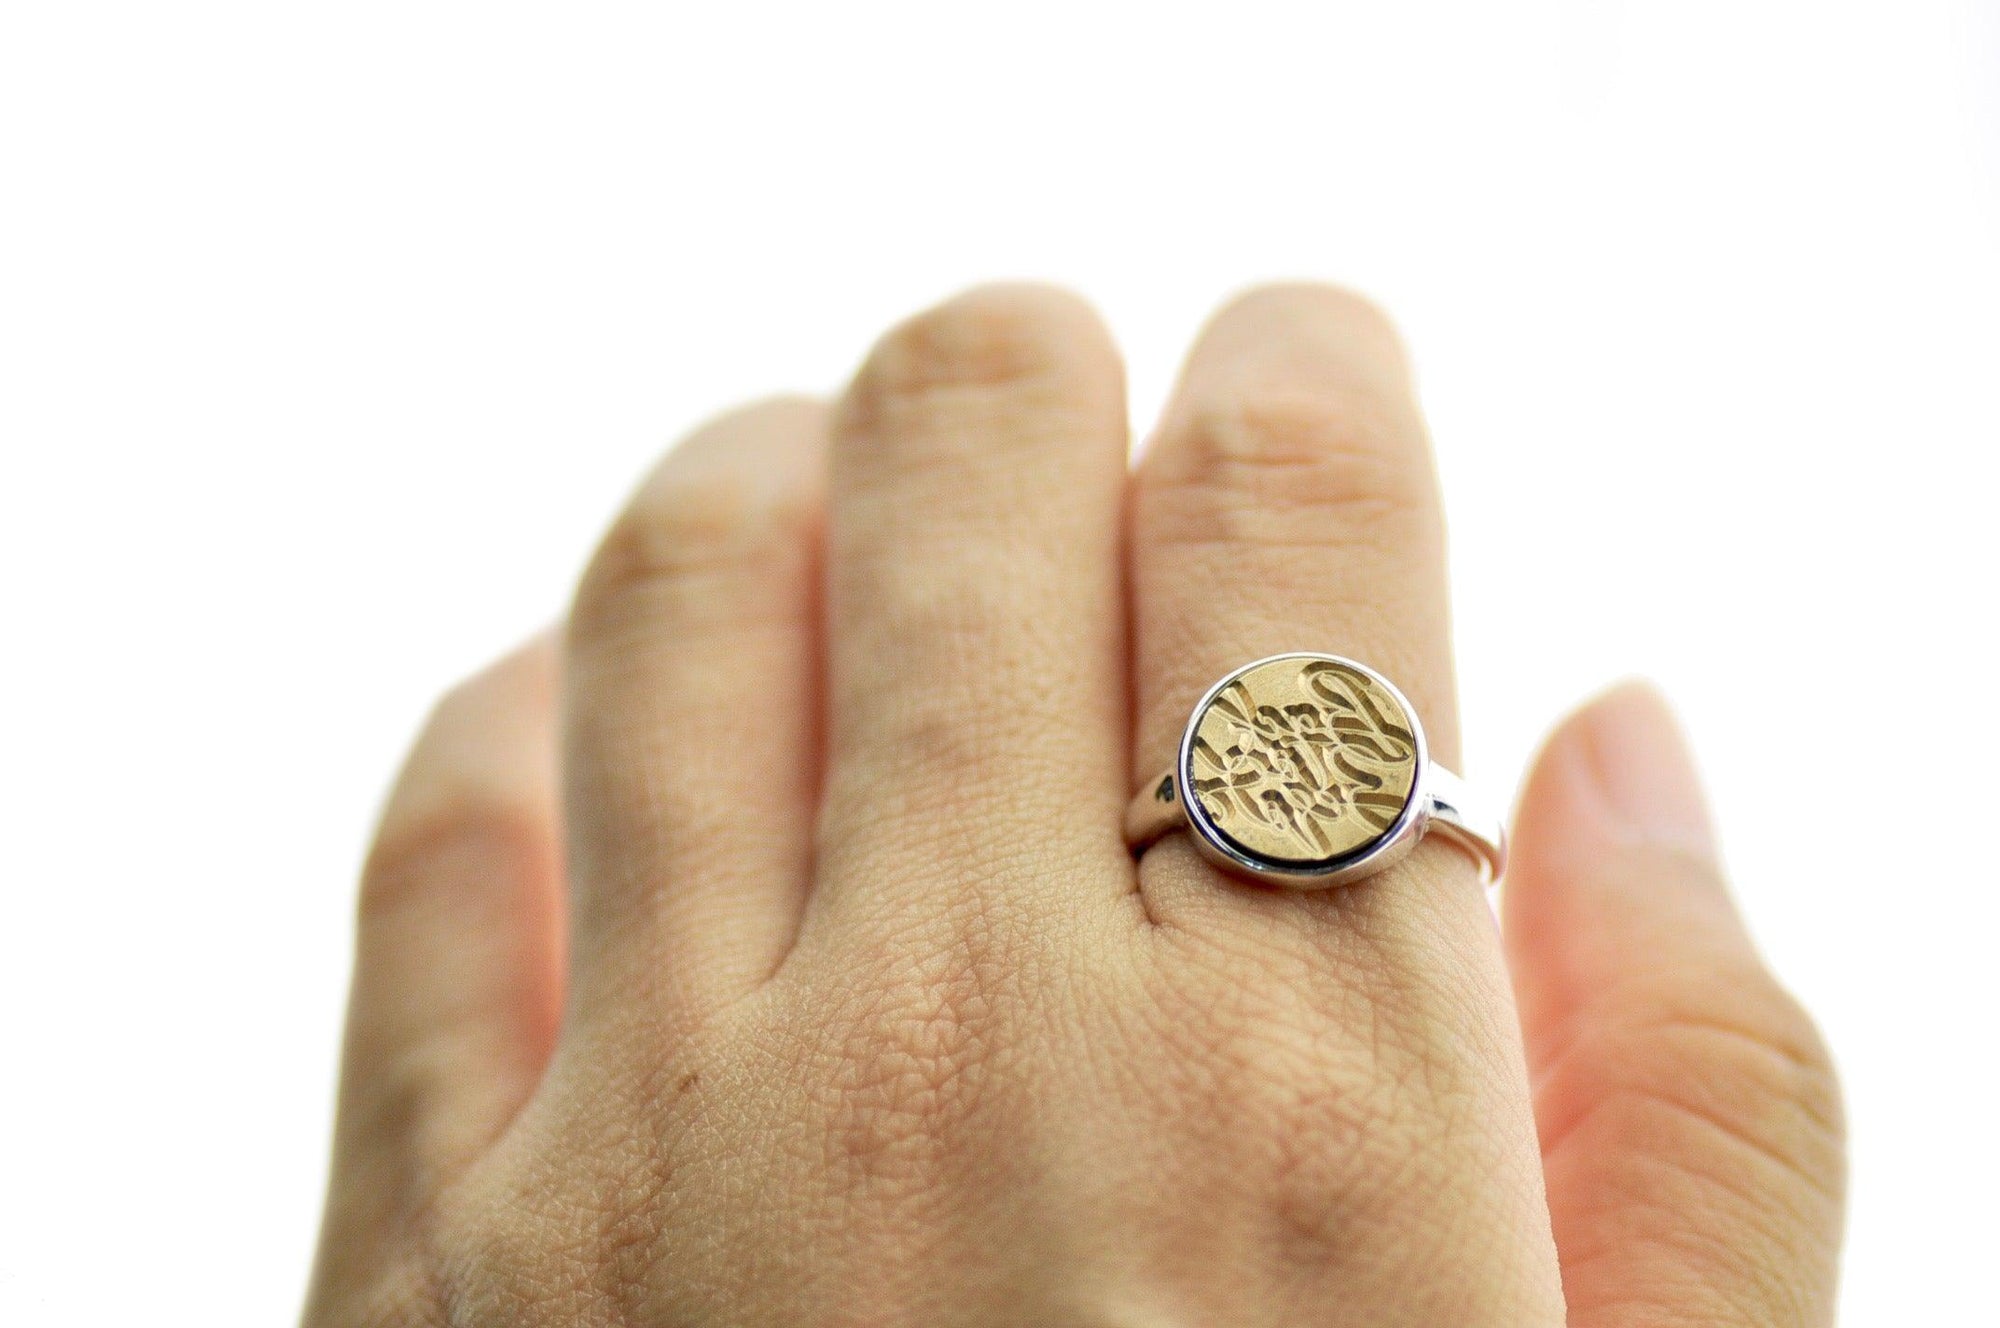 Design your own 12mm Minimal Signet Ring - Backtozero B20 - 12m, 12mm, 12mm ring, 12mn, bespoke, Custom, customsignet, Design Your Own, her, logo, ring, signet ring, size 7, size 8, wax seal, wax seal ring